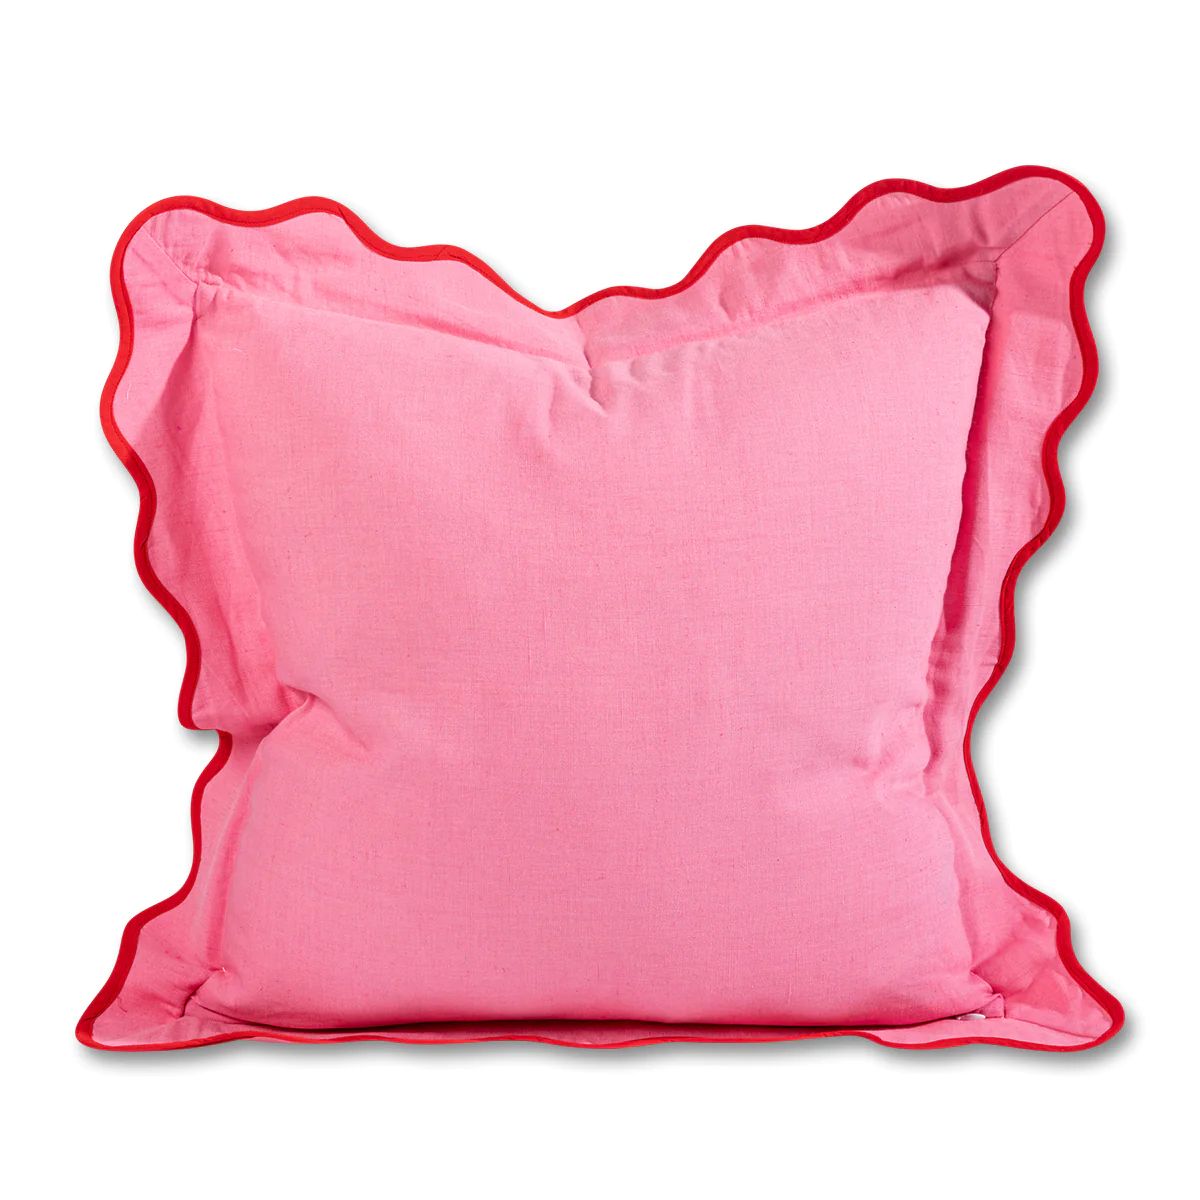 Furbish Studio - Darcy Linen Pillow - Light Pink + Cherry | Furbish Studio